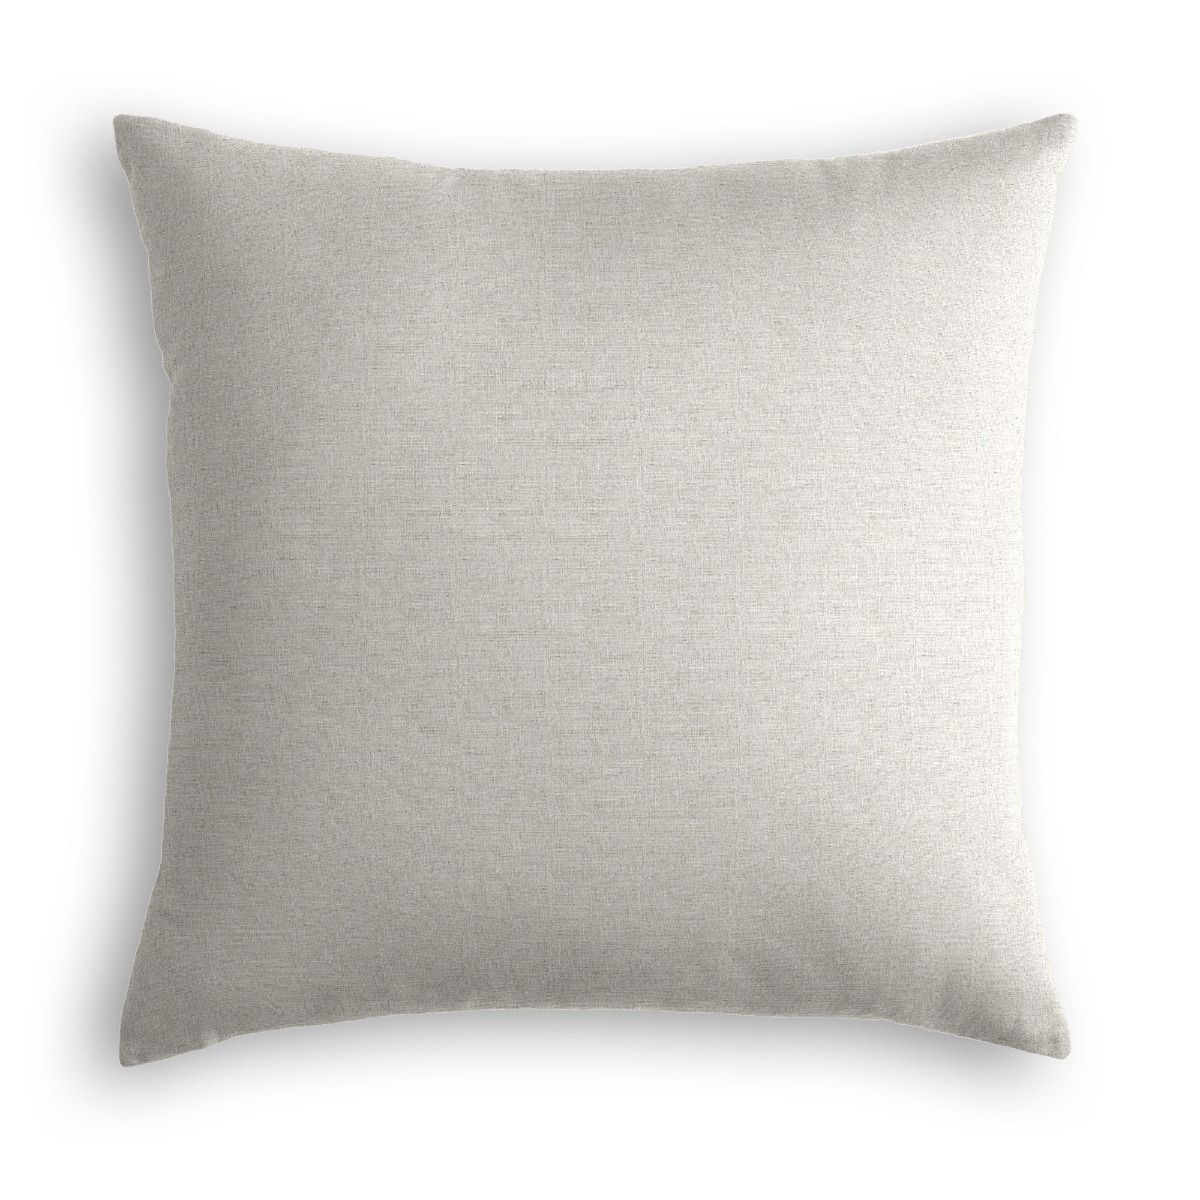 Classic Linen Pillow, Sandy Tan, 18" x 18" - Image 0